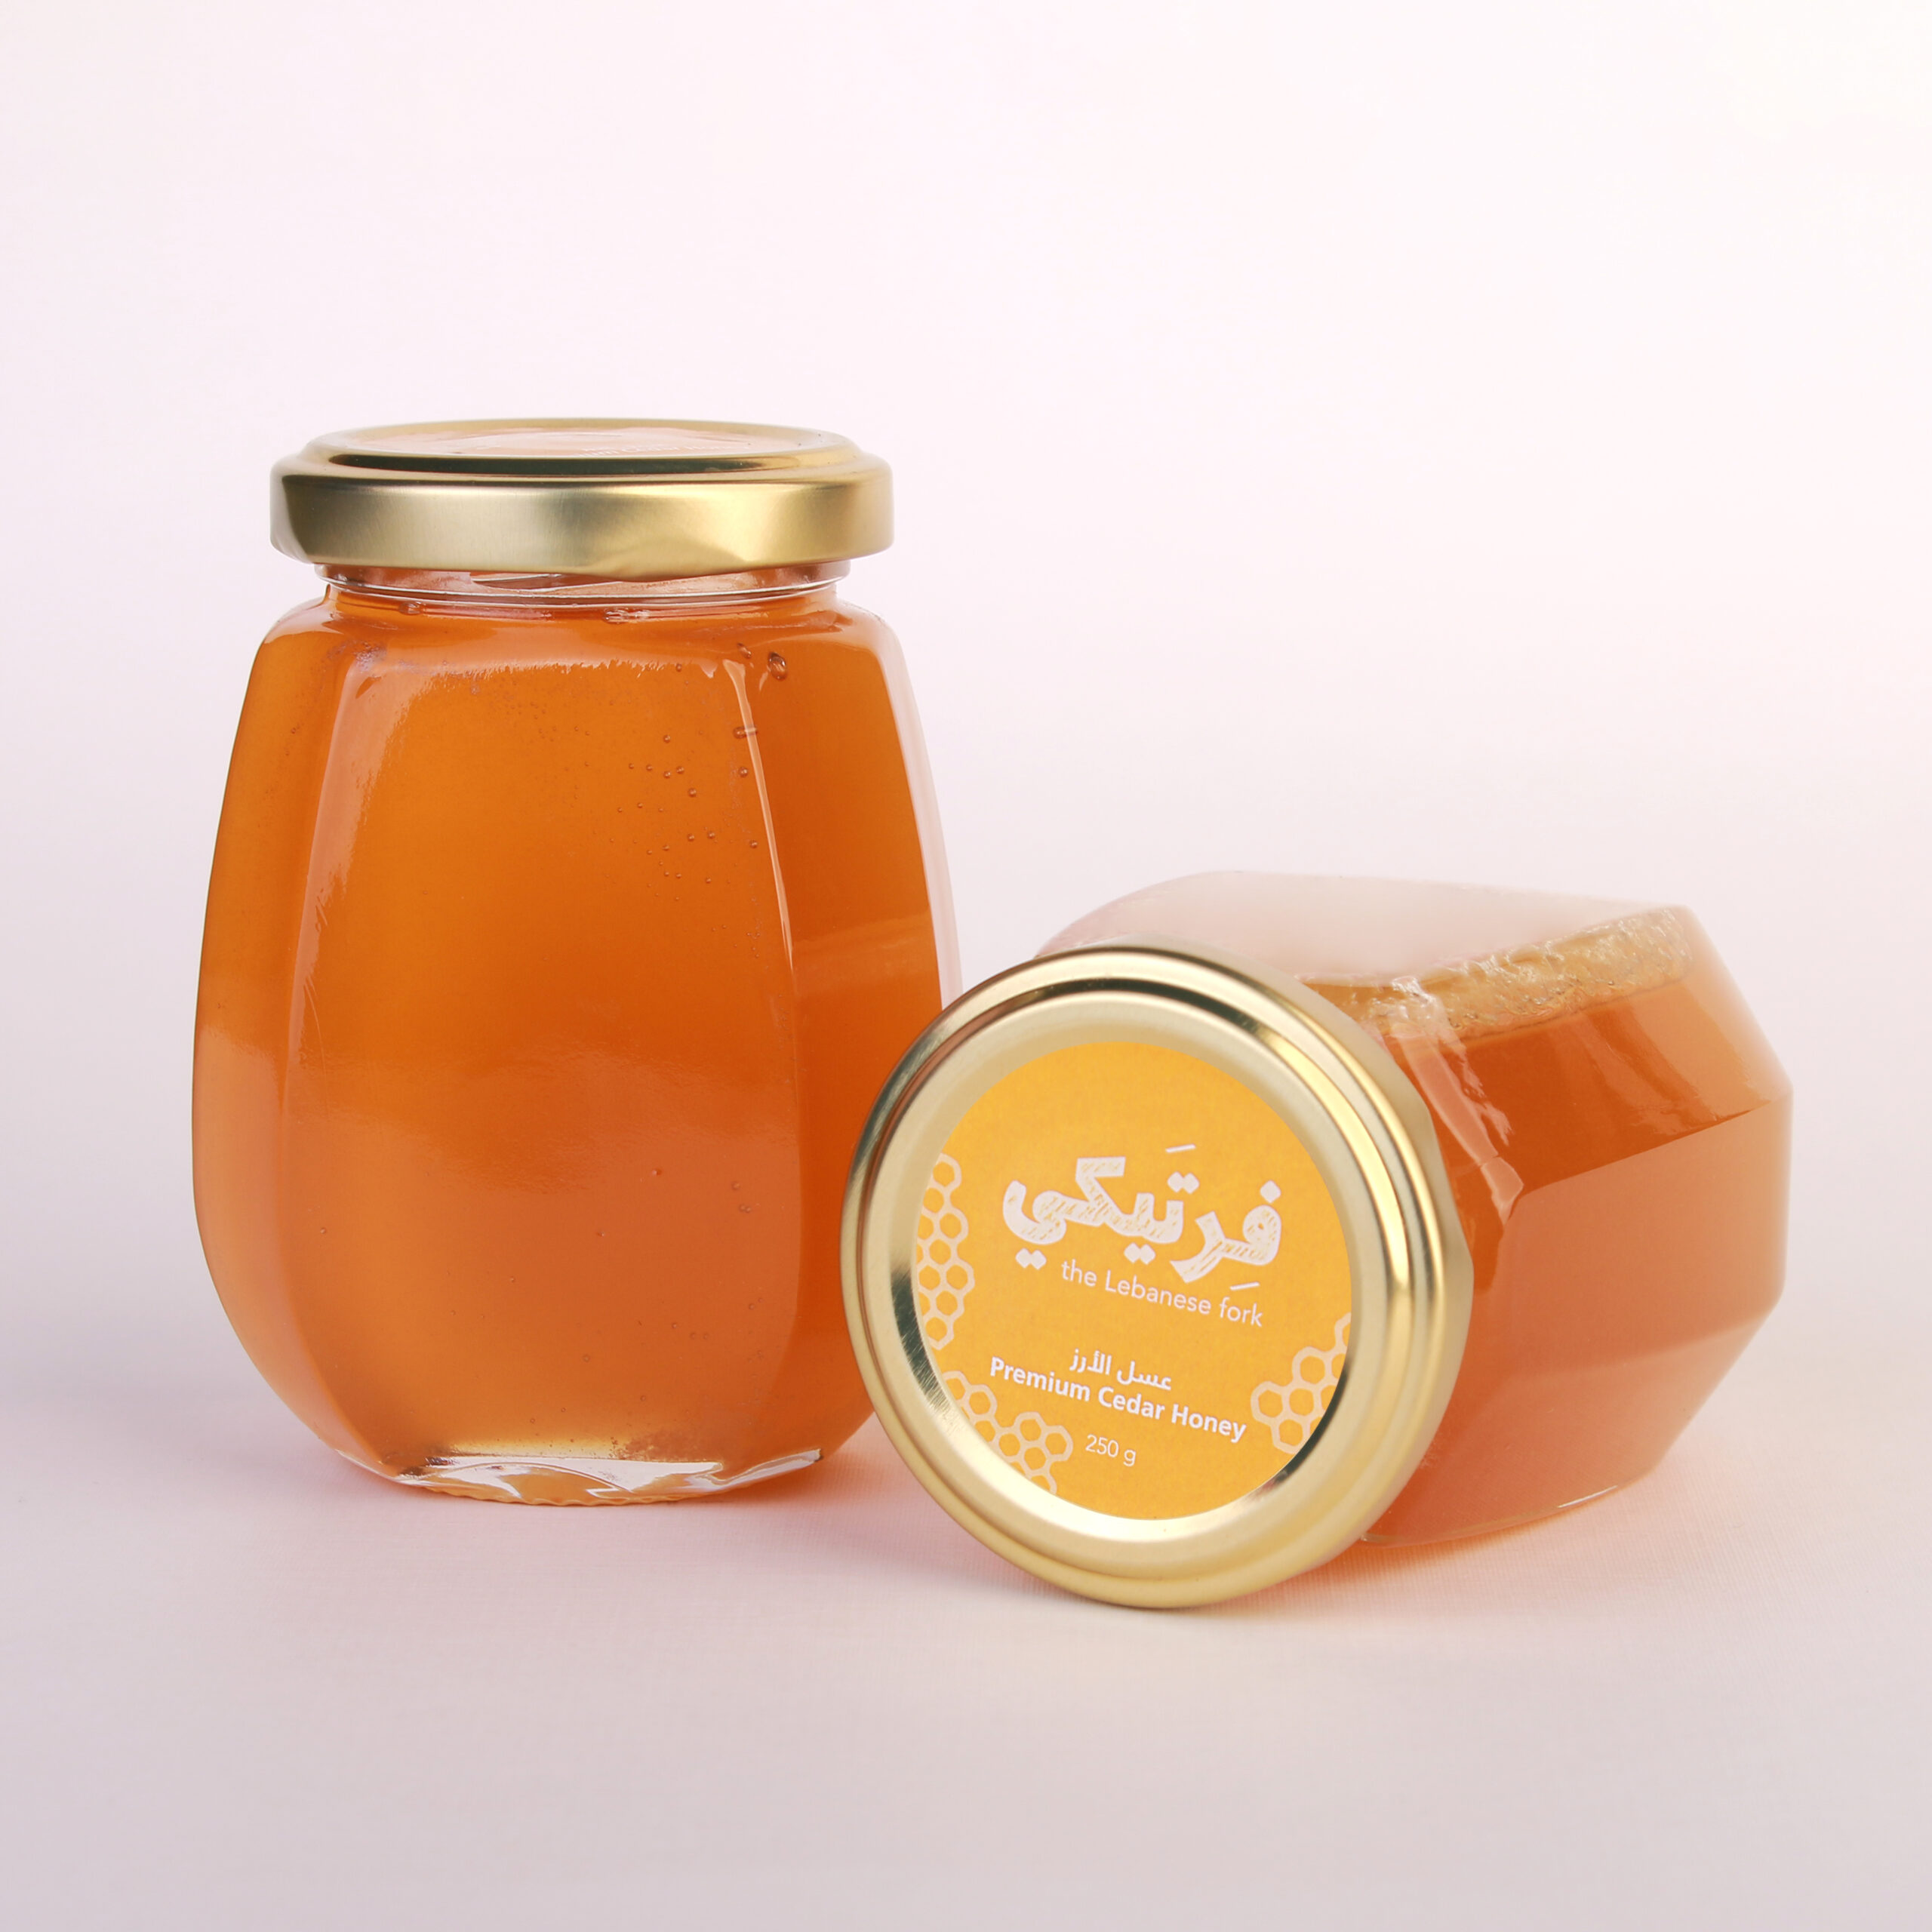 Premium Cedar Honey – Final